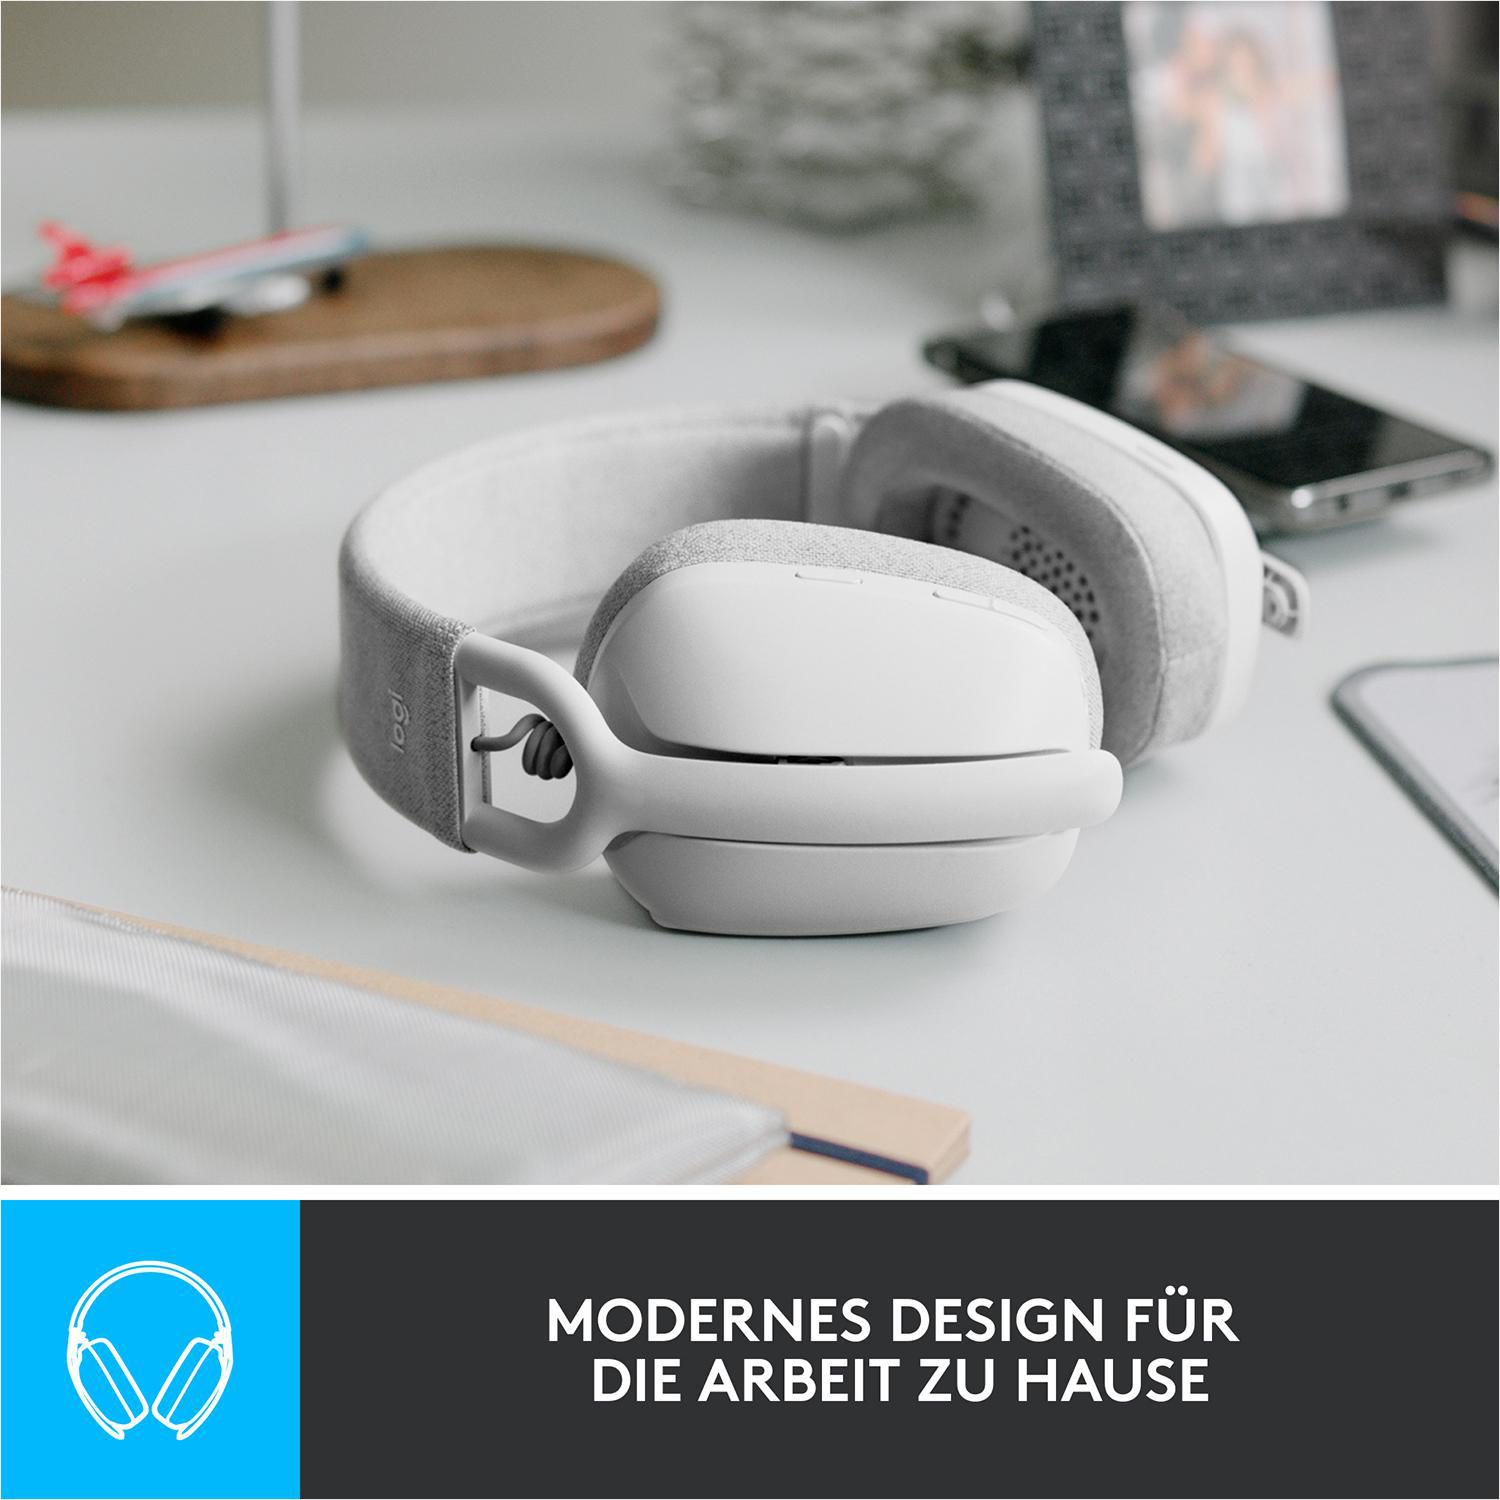 LOGITECH Zone Vibe Bluetooth Headset 100, Weiß Over-ear